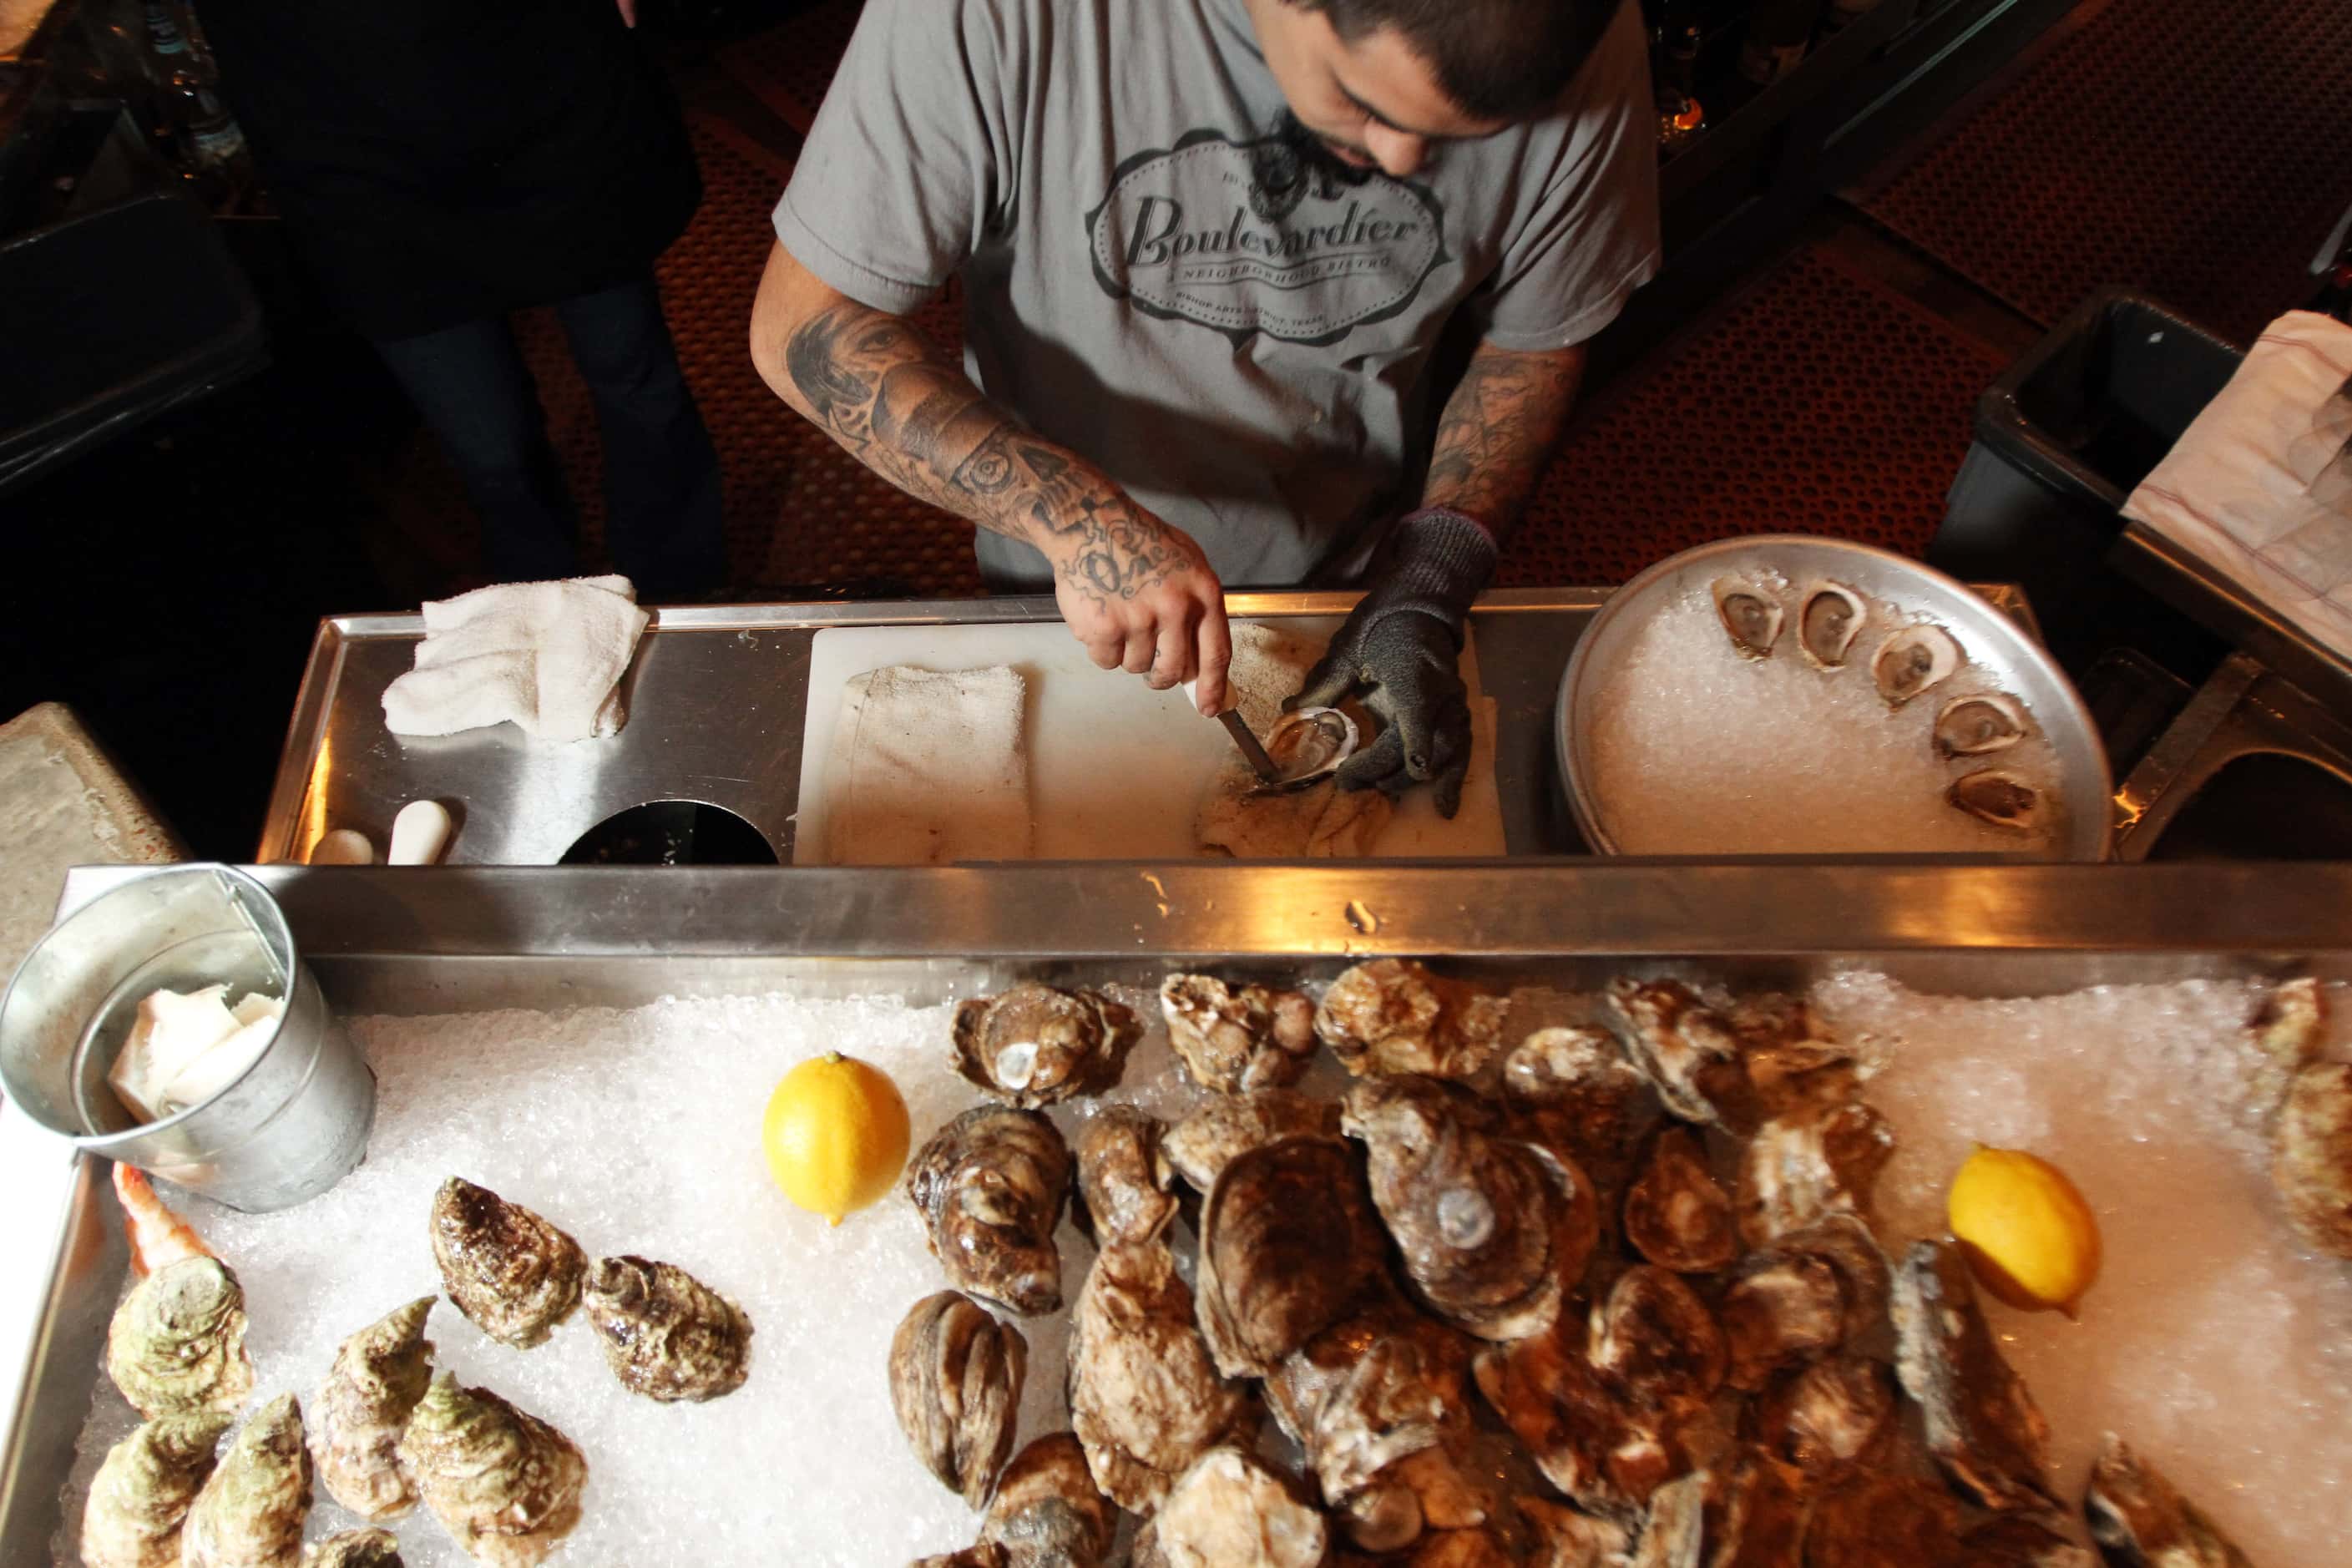 Oyster shucker Arthur Burnett prepares oysters at Boulevardier in Dallas in 2012.